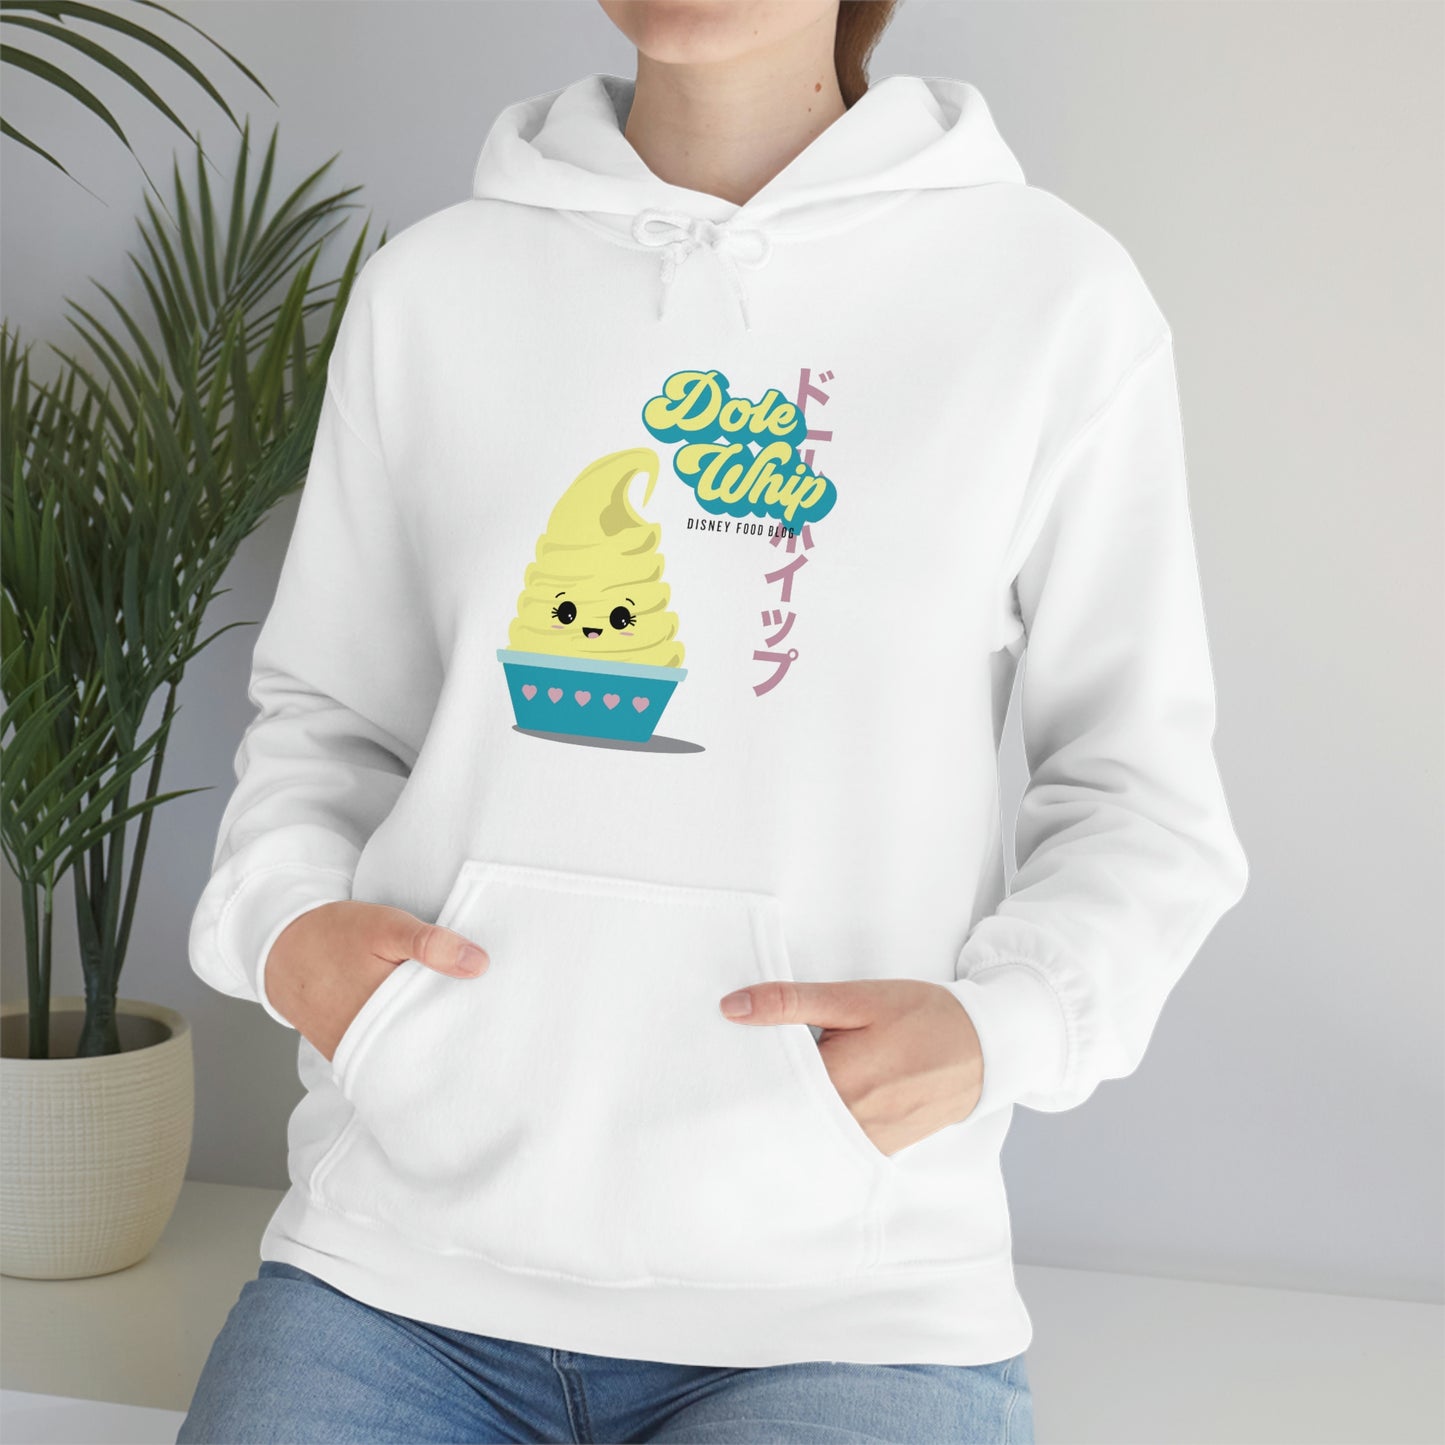 Pineapple Whip - Adult Unisex Hoodie Sweatshirt